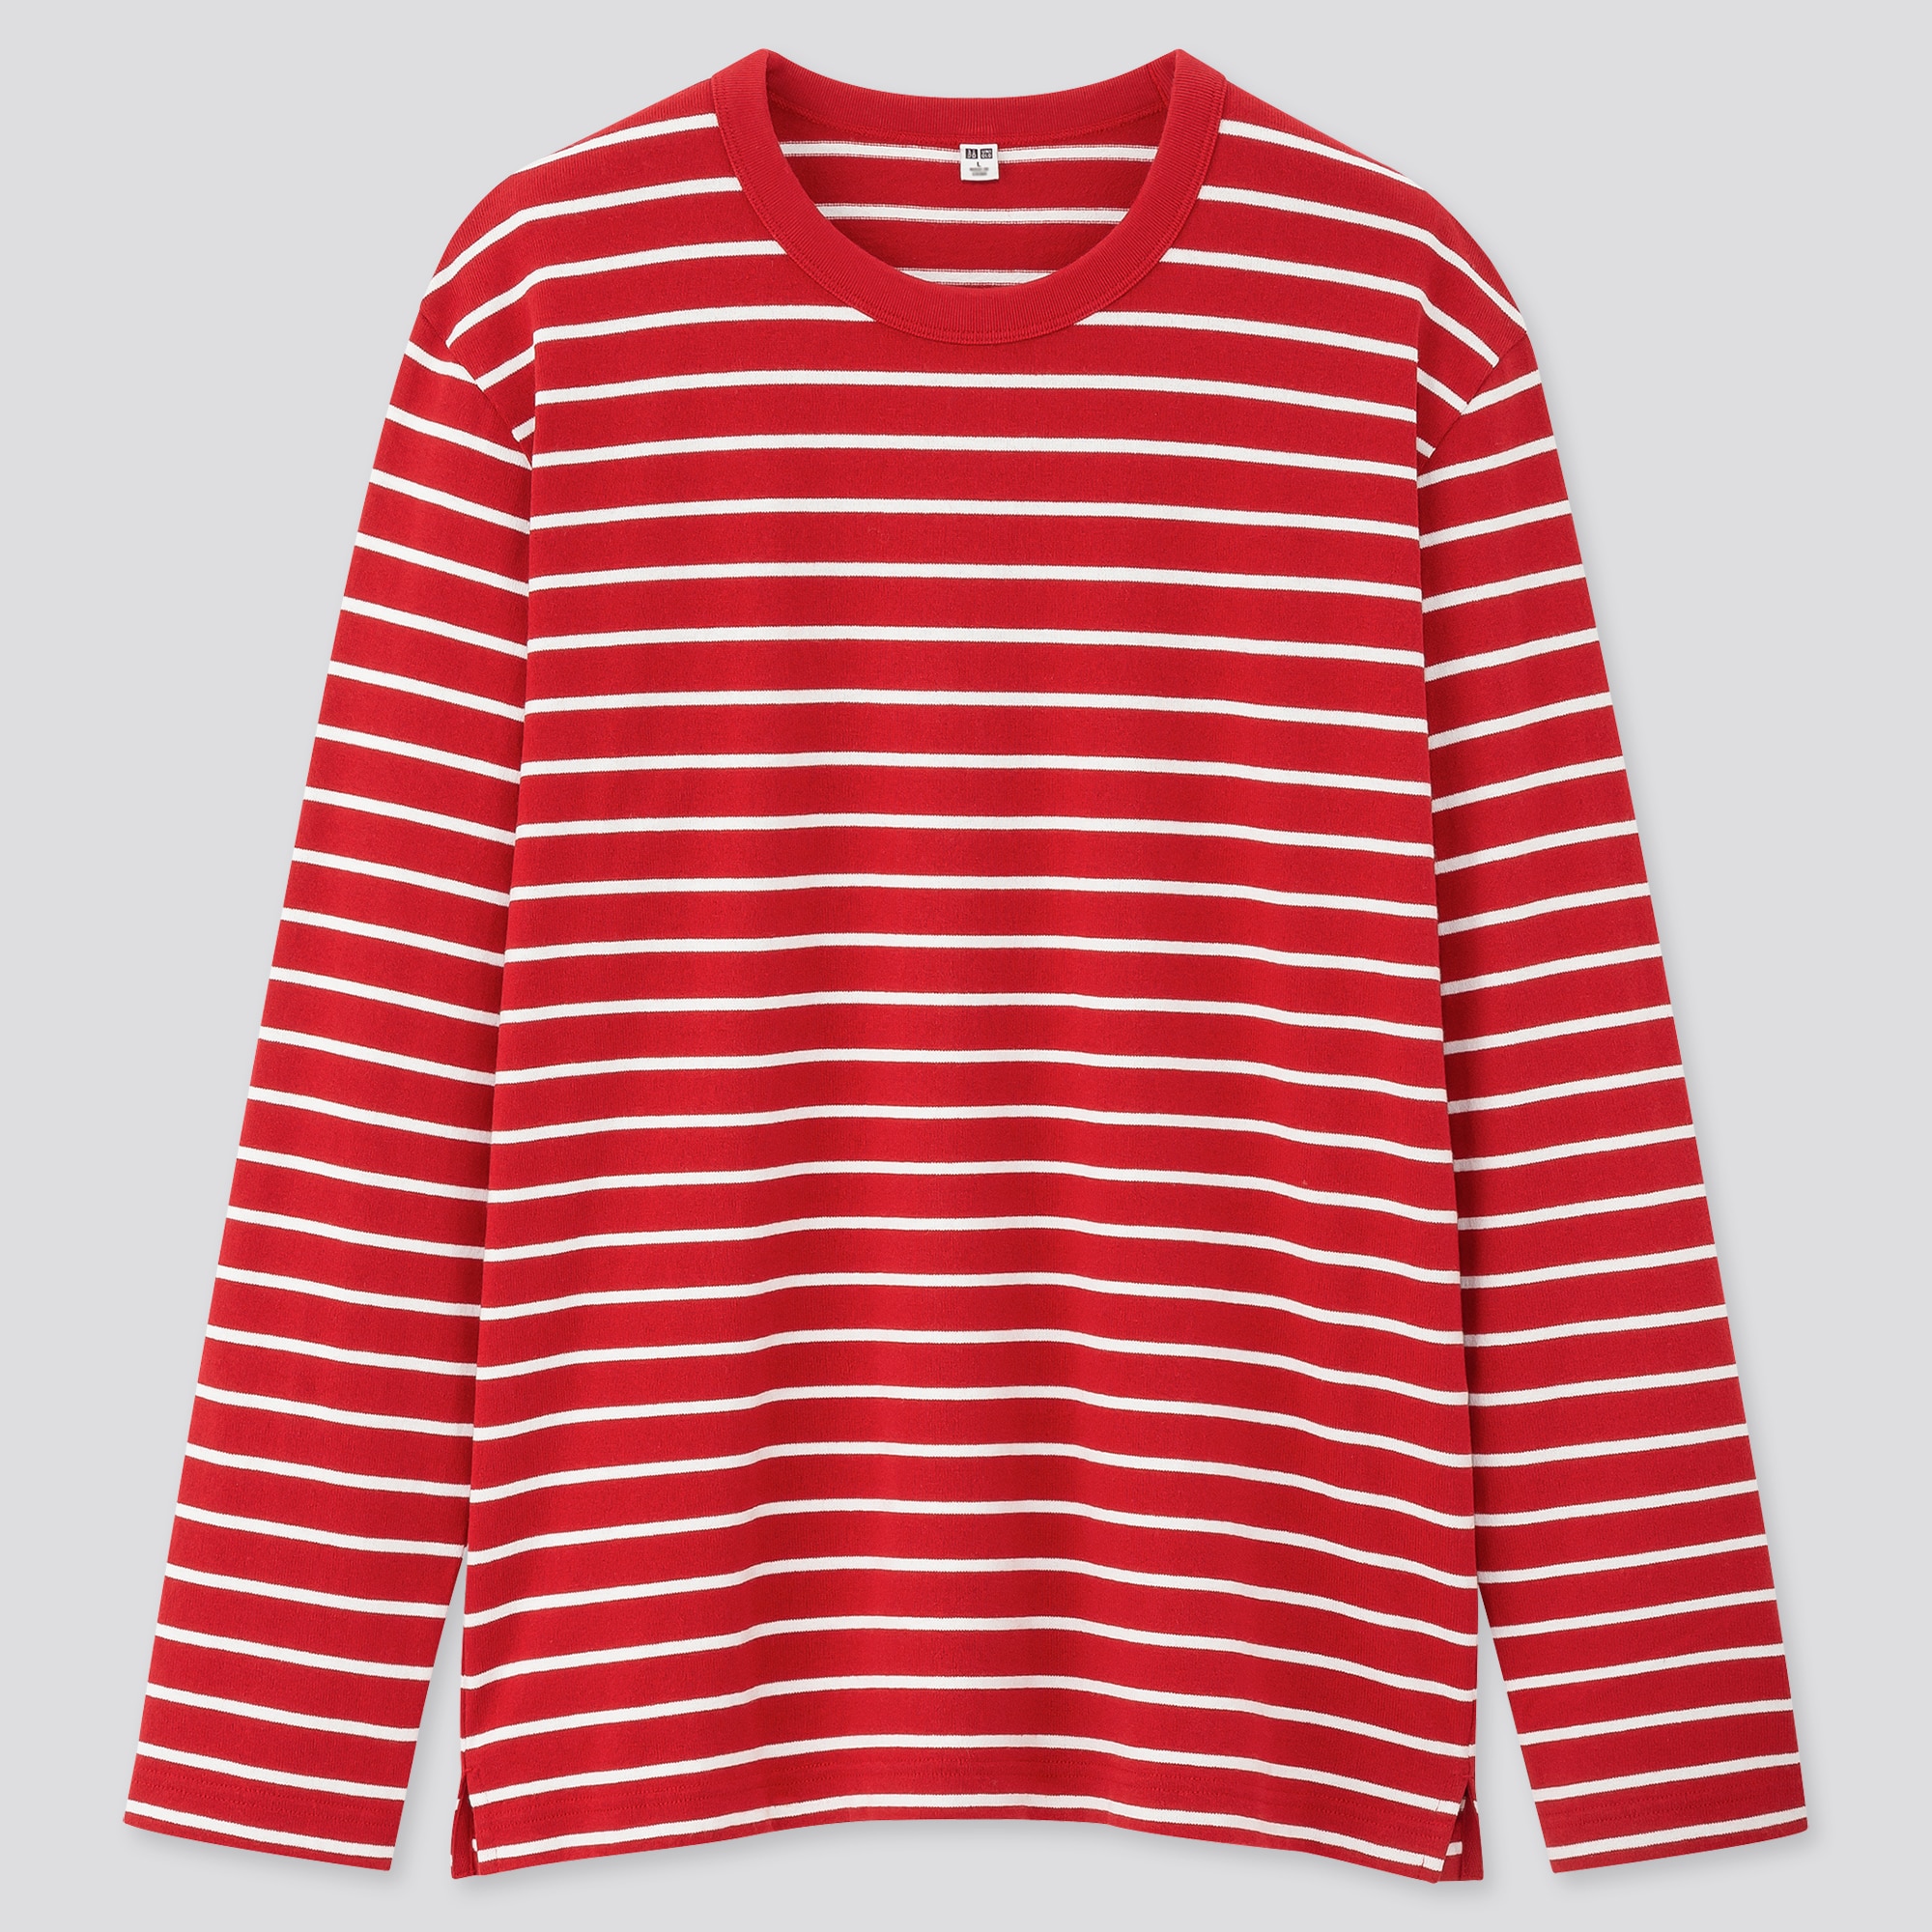 red striped shirt men